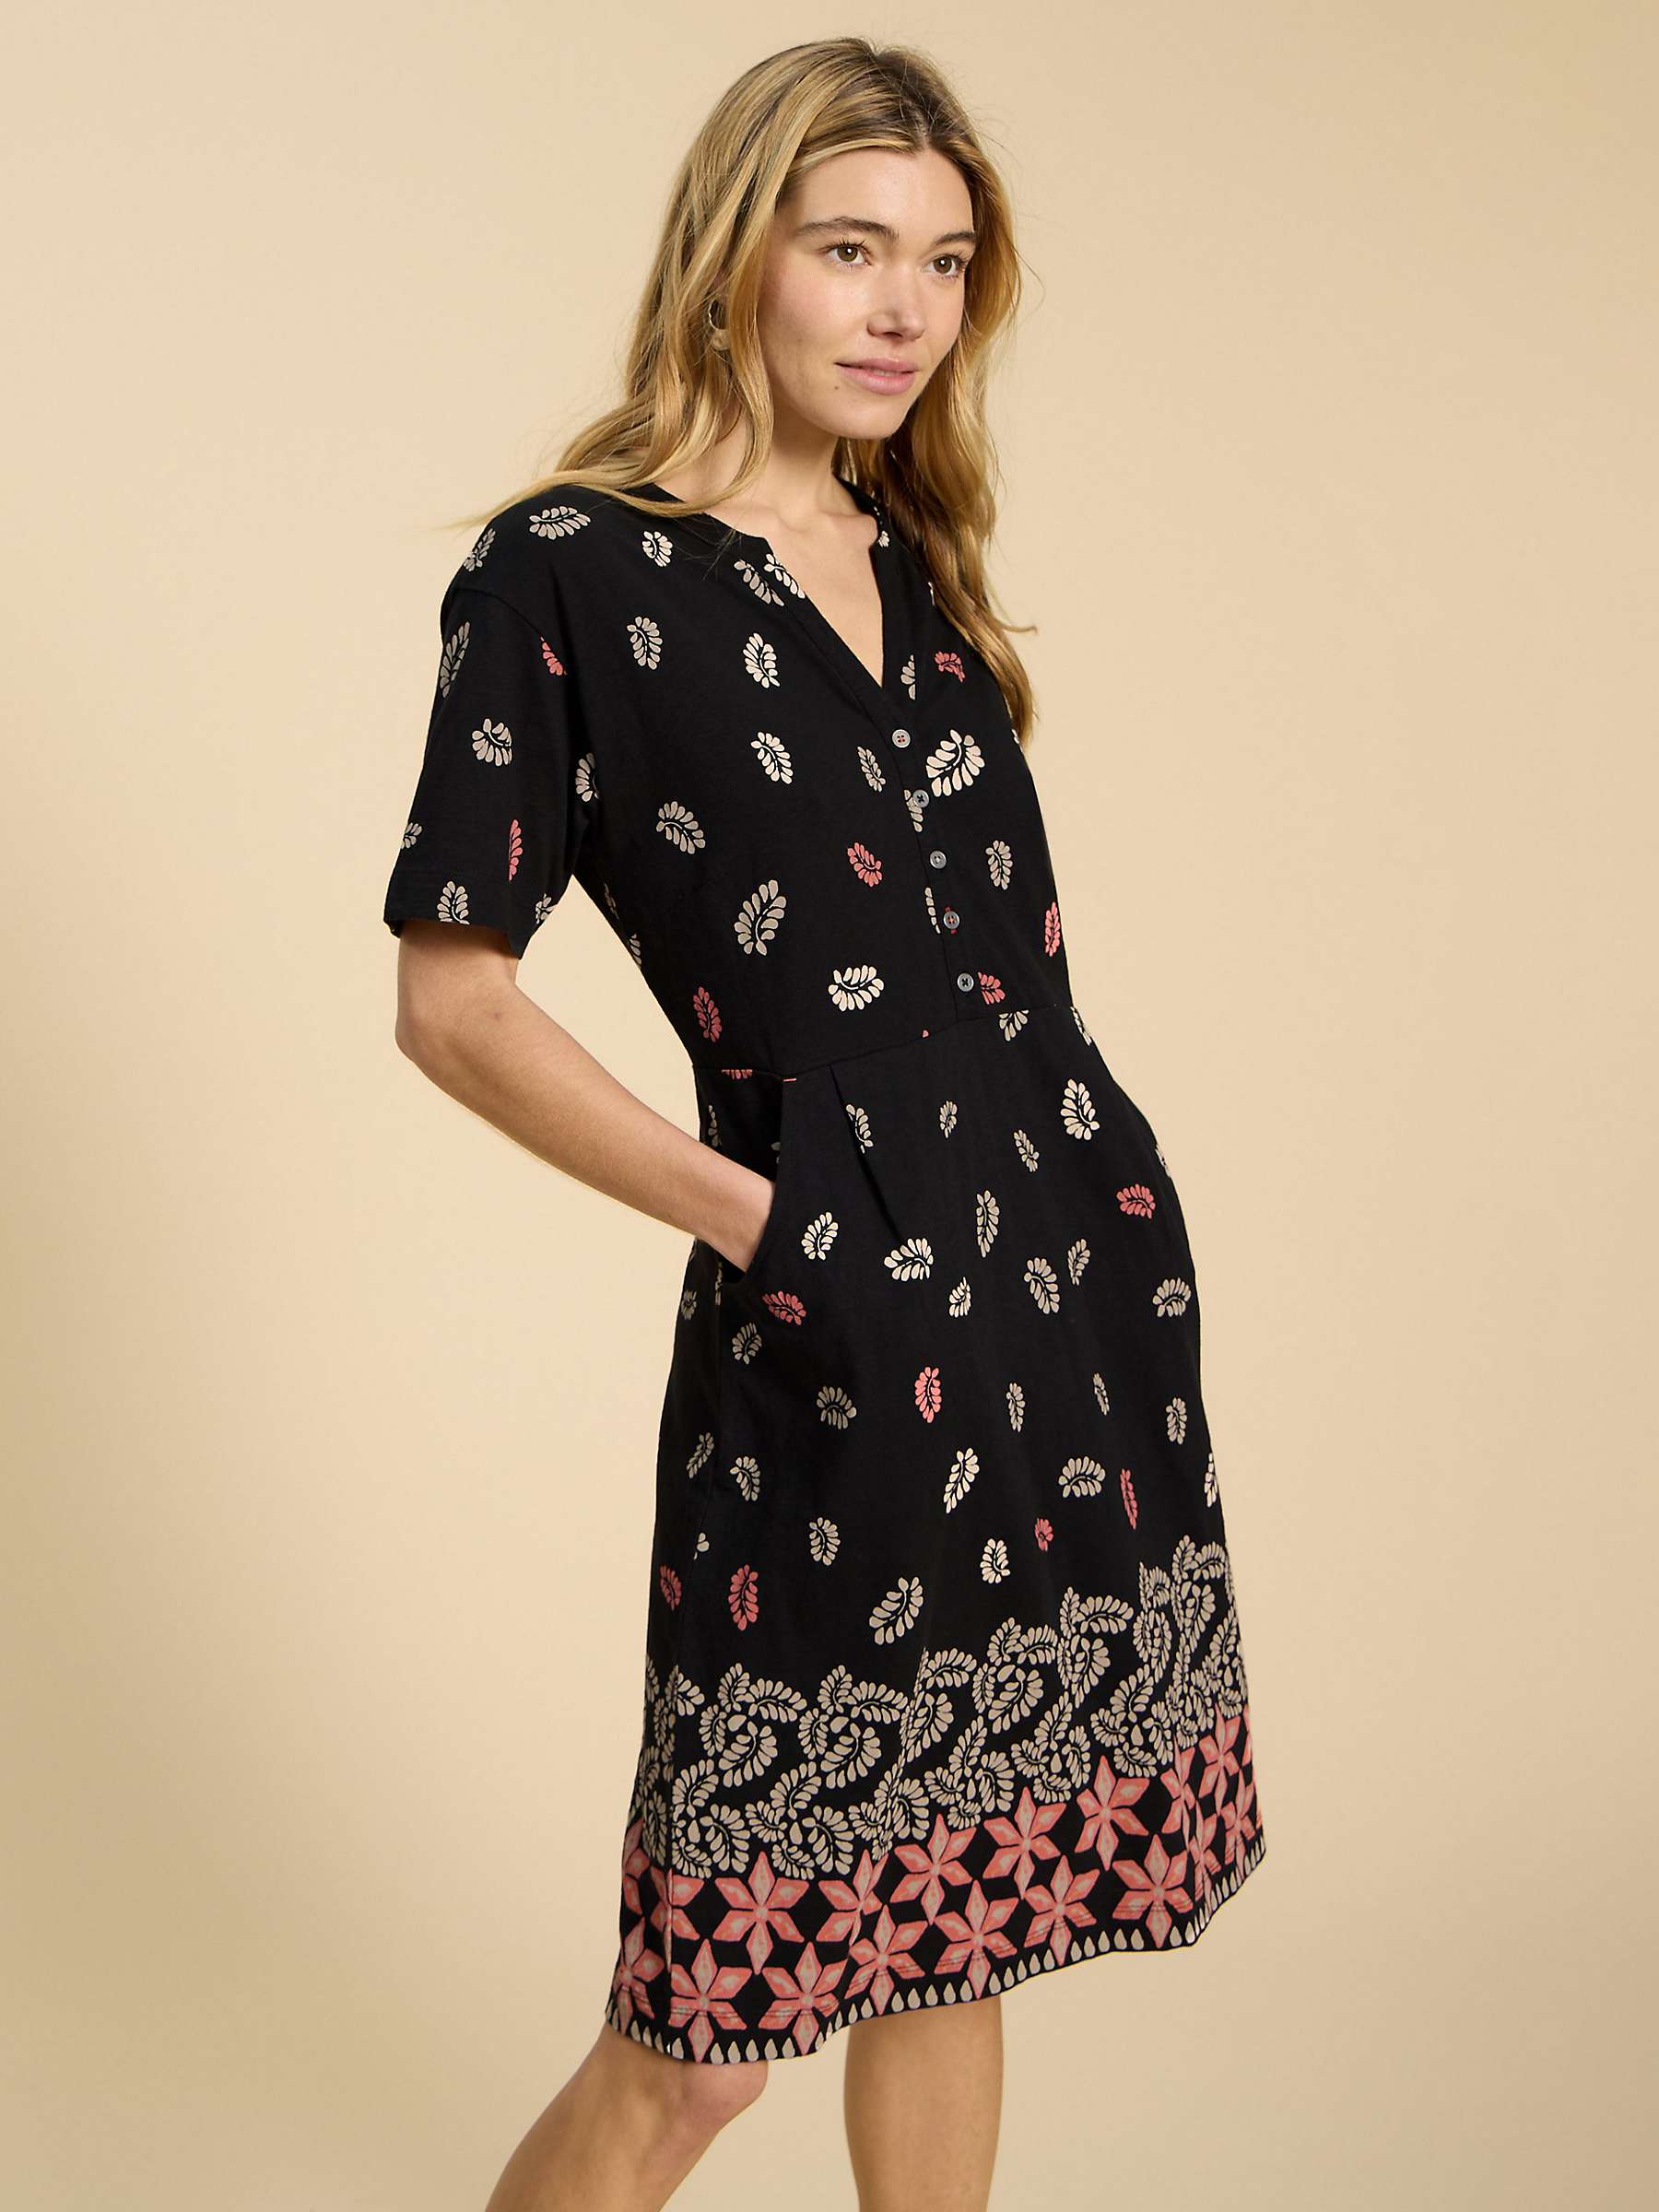 Buy White Stuff Tammy Leaf and Flower Print Cotton Jersey Dress, Black/Multi Online at johnlewis.com